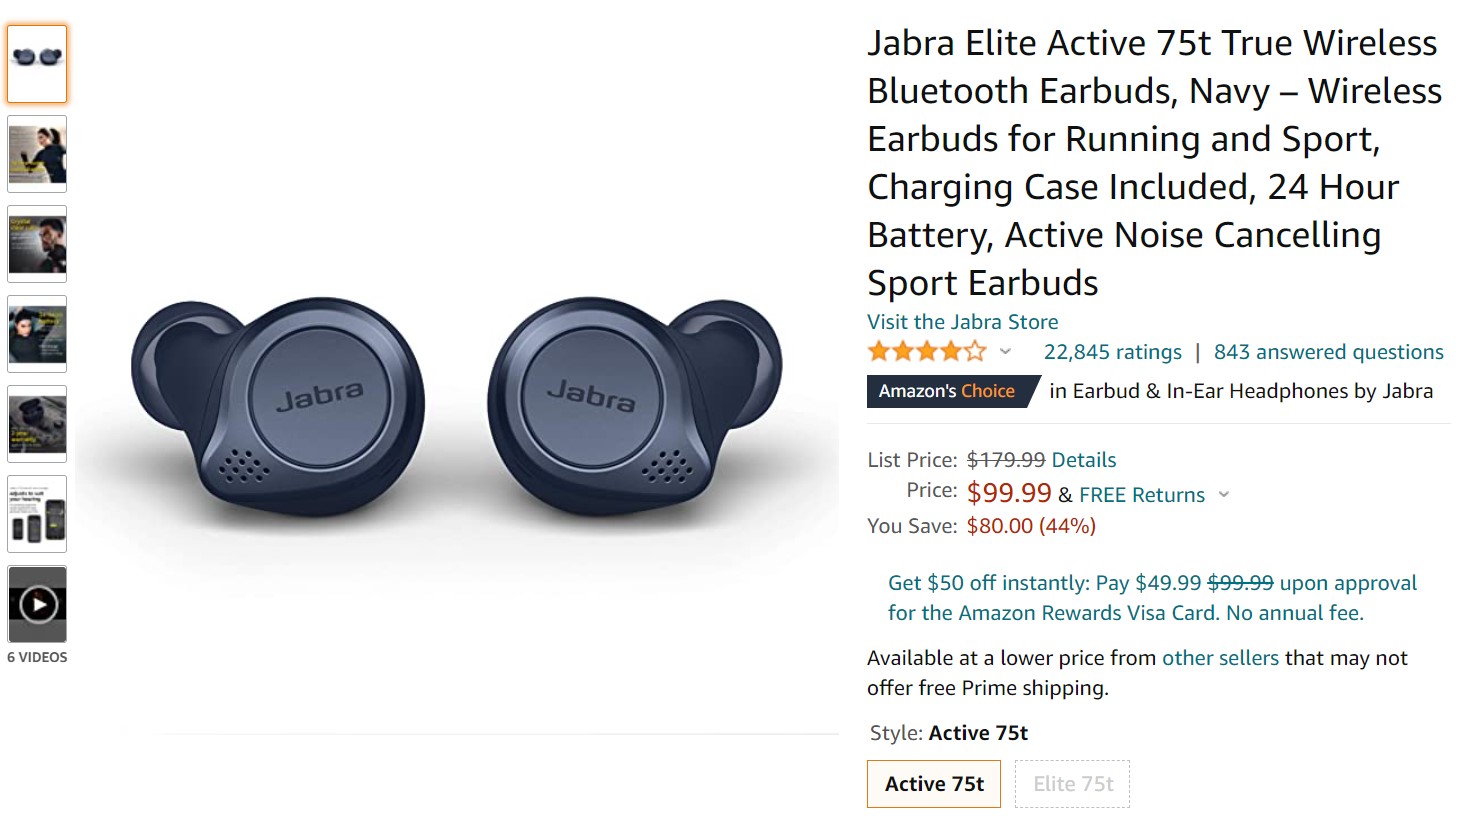 Jabra Elite Active 75t True Wireless Bluetooth Earbuds Amazon Deal